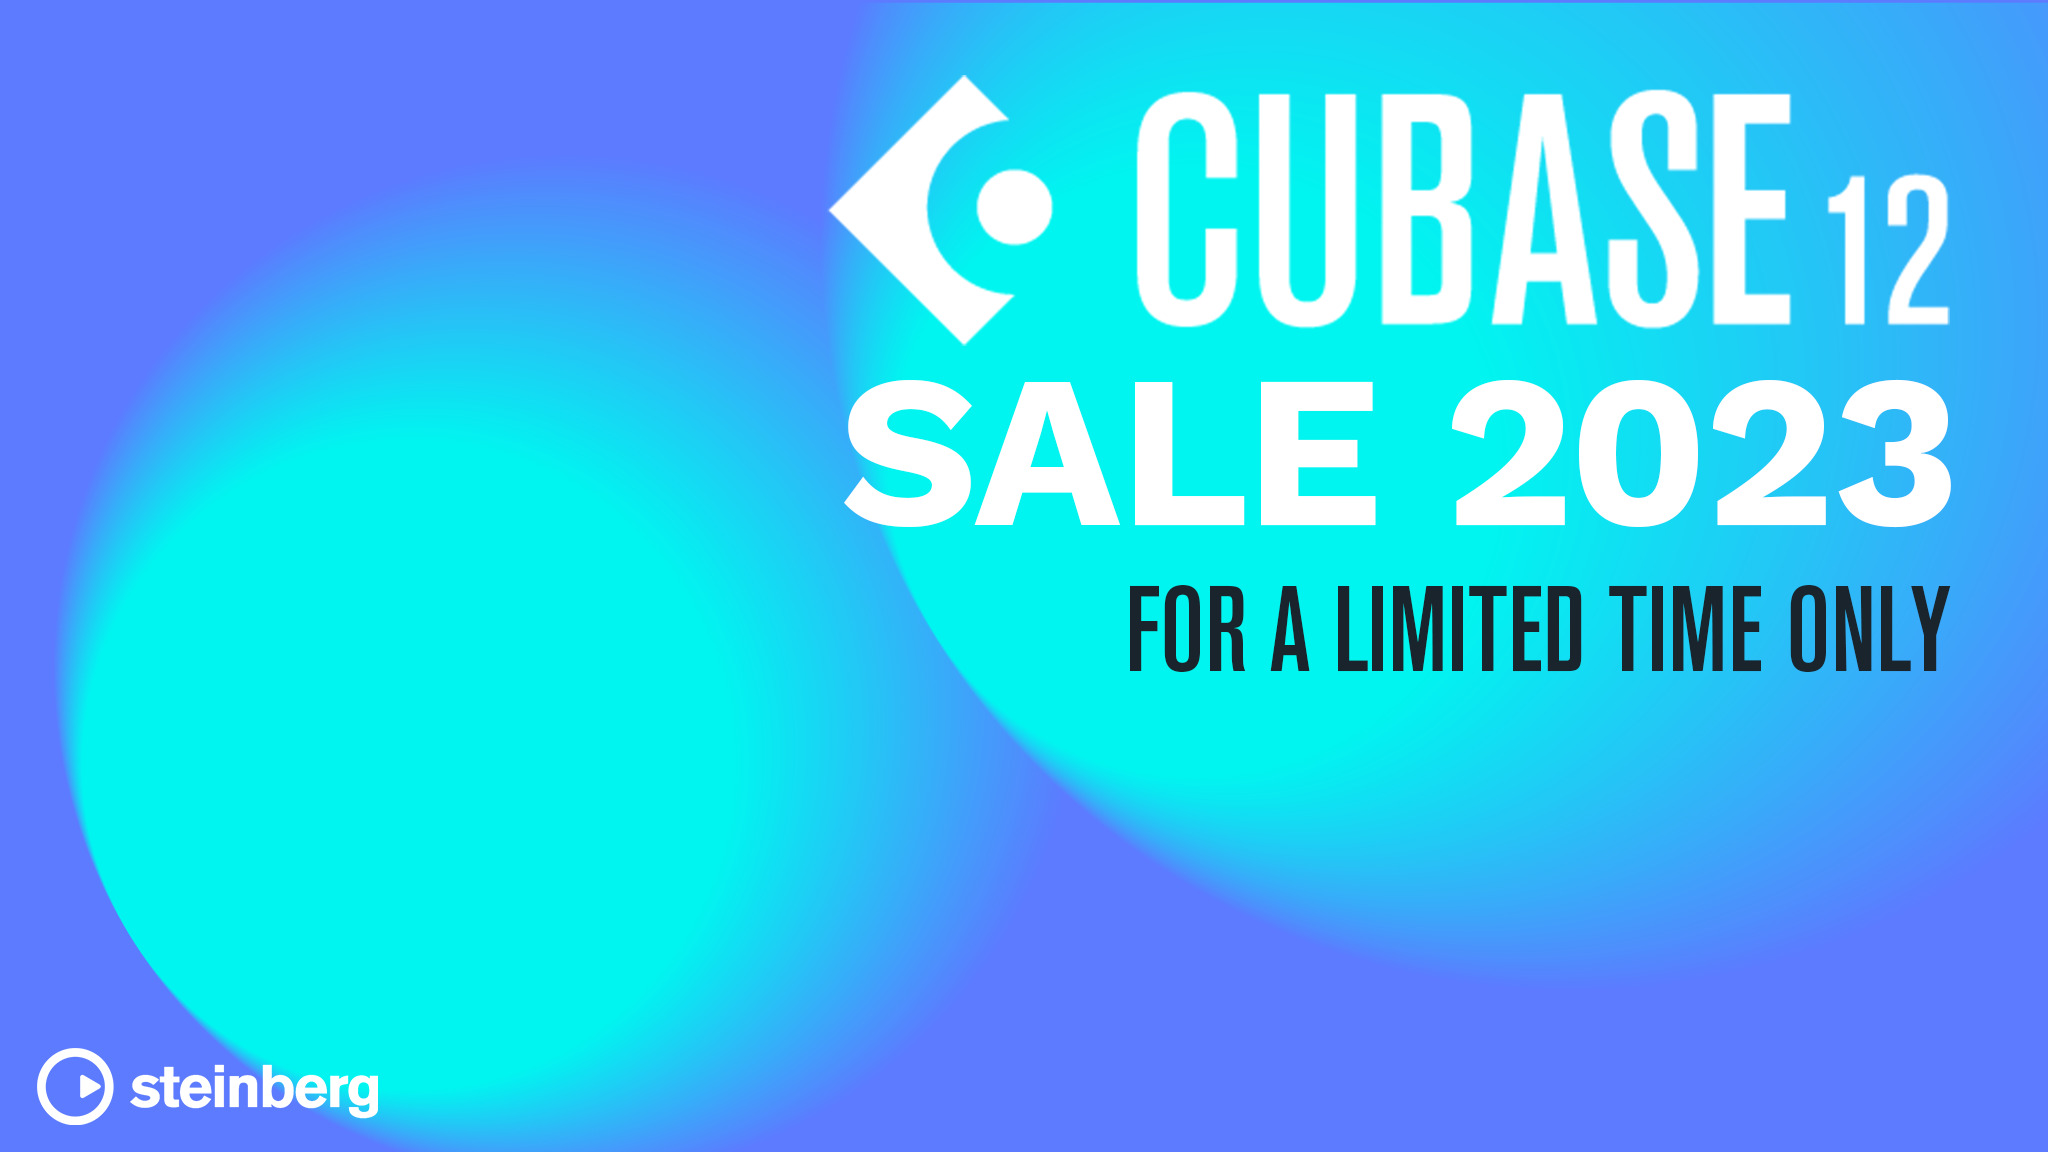 Cubaseが40%OFFでゲットできるキャンペーン、CUBASE SALE 2023実施中 